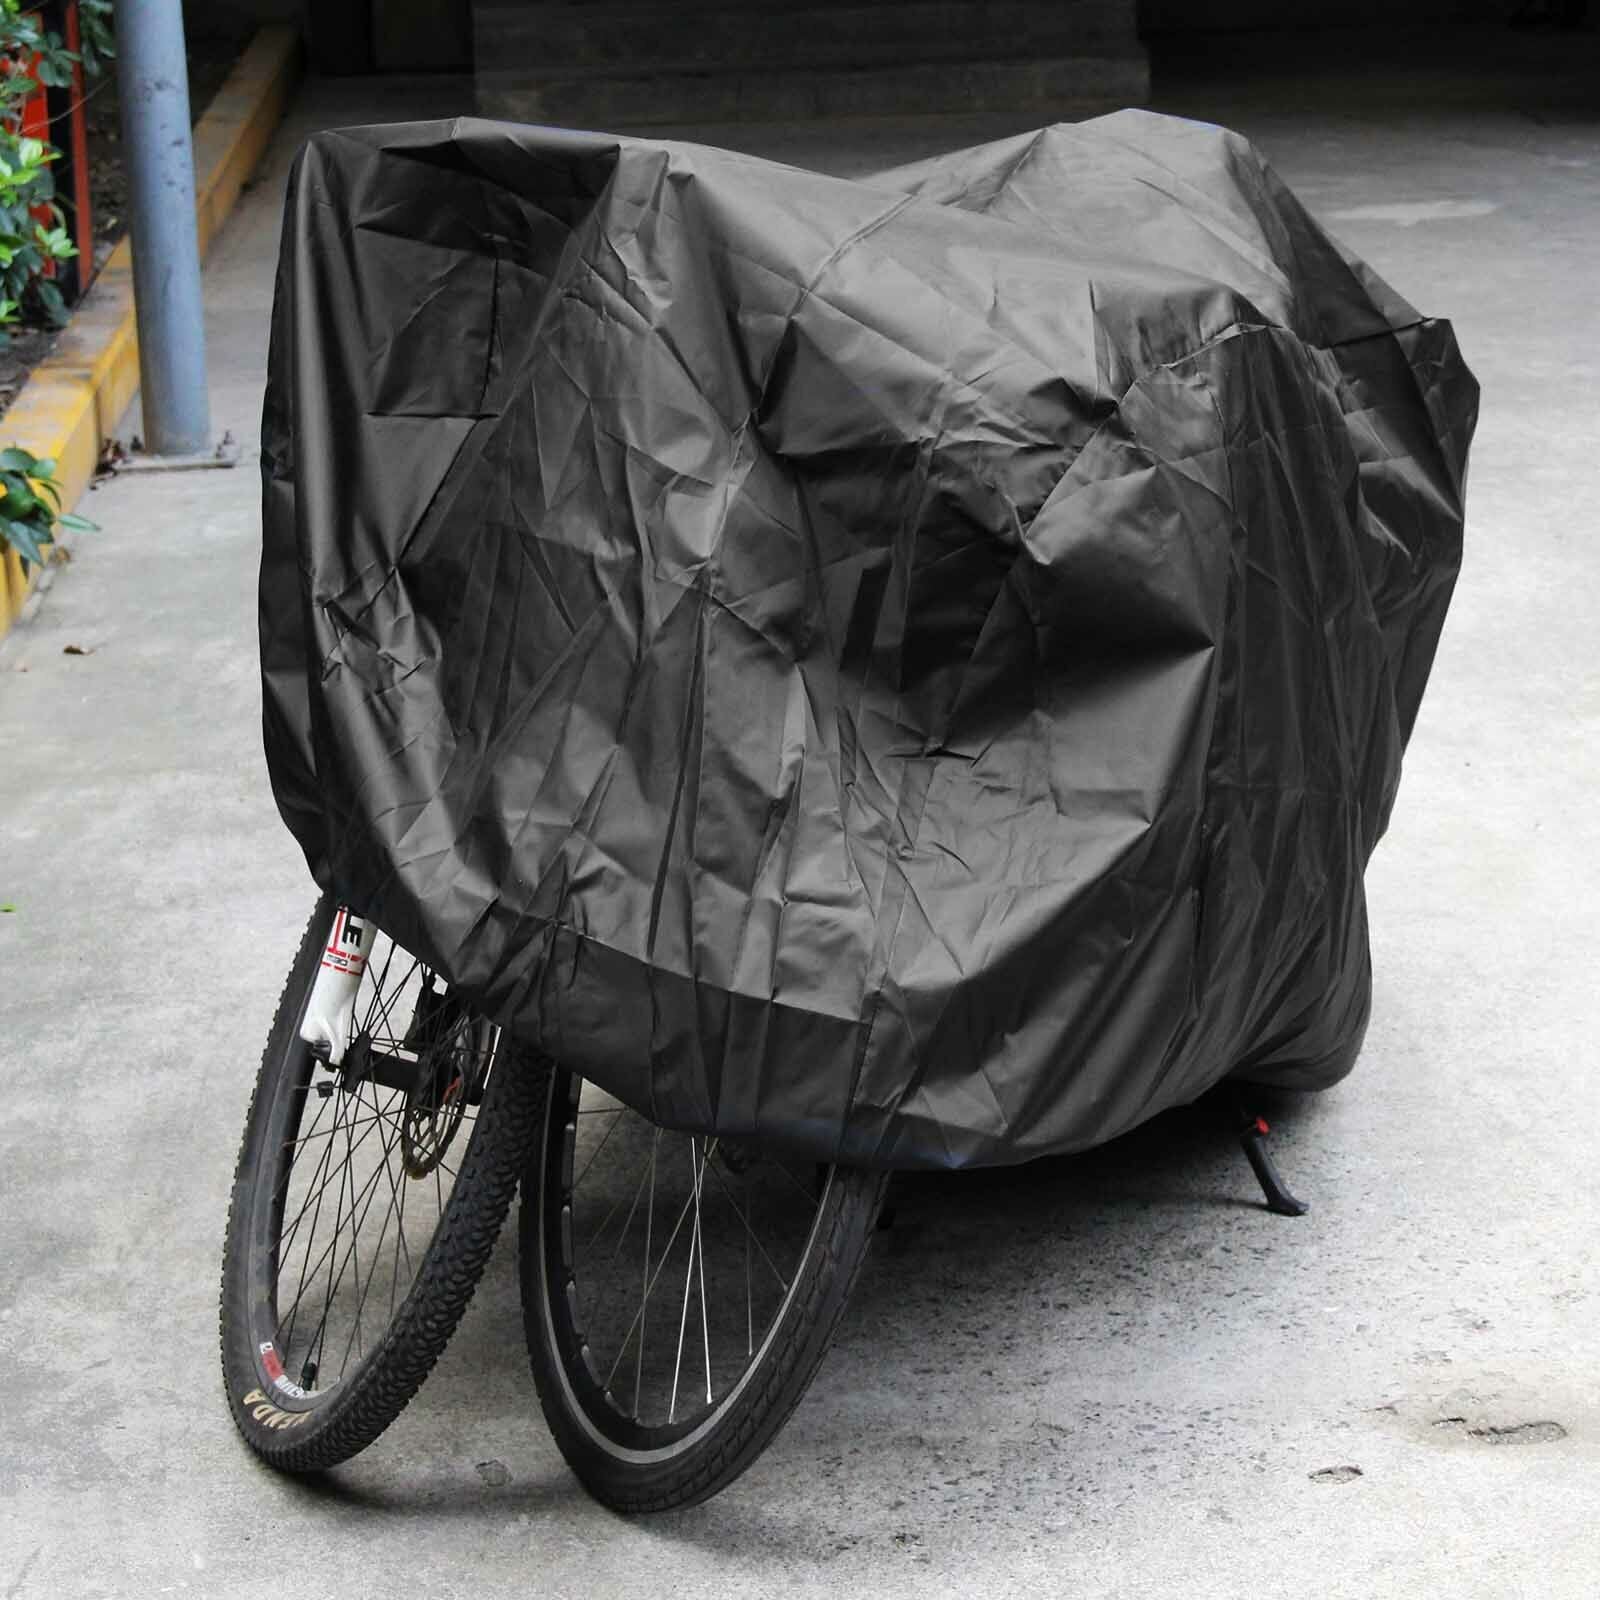 waterproof bicycle cover